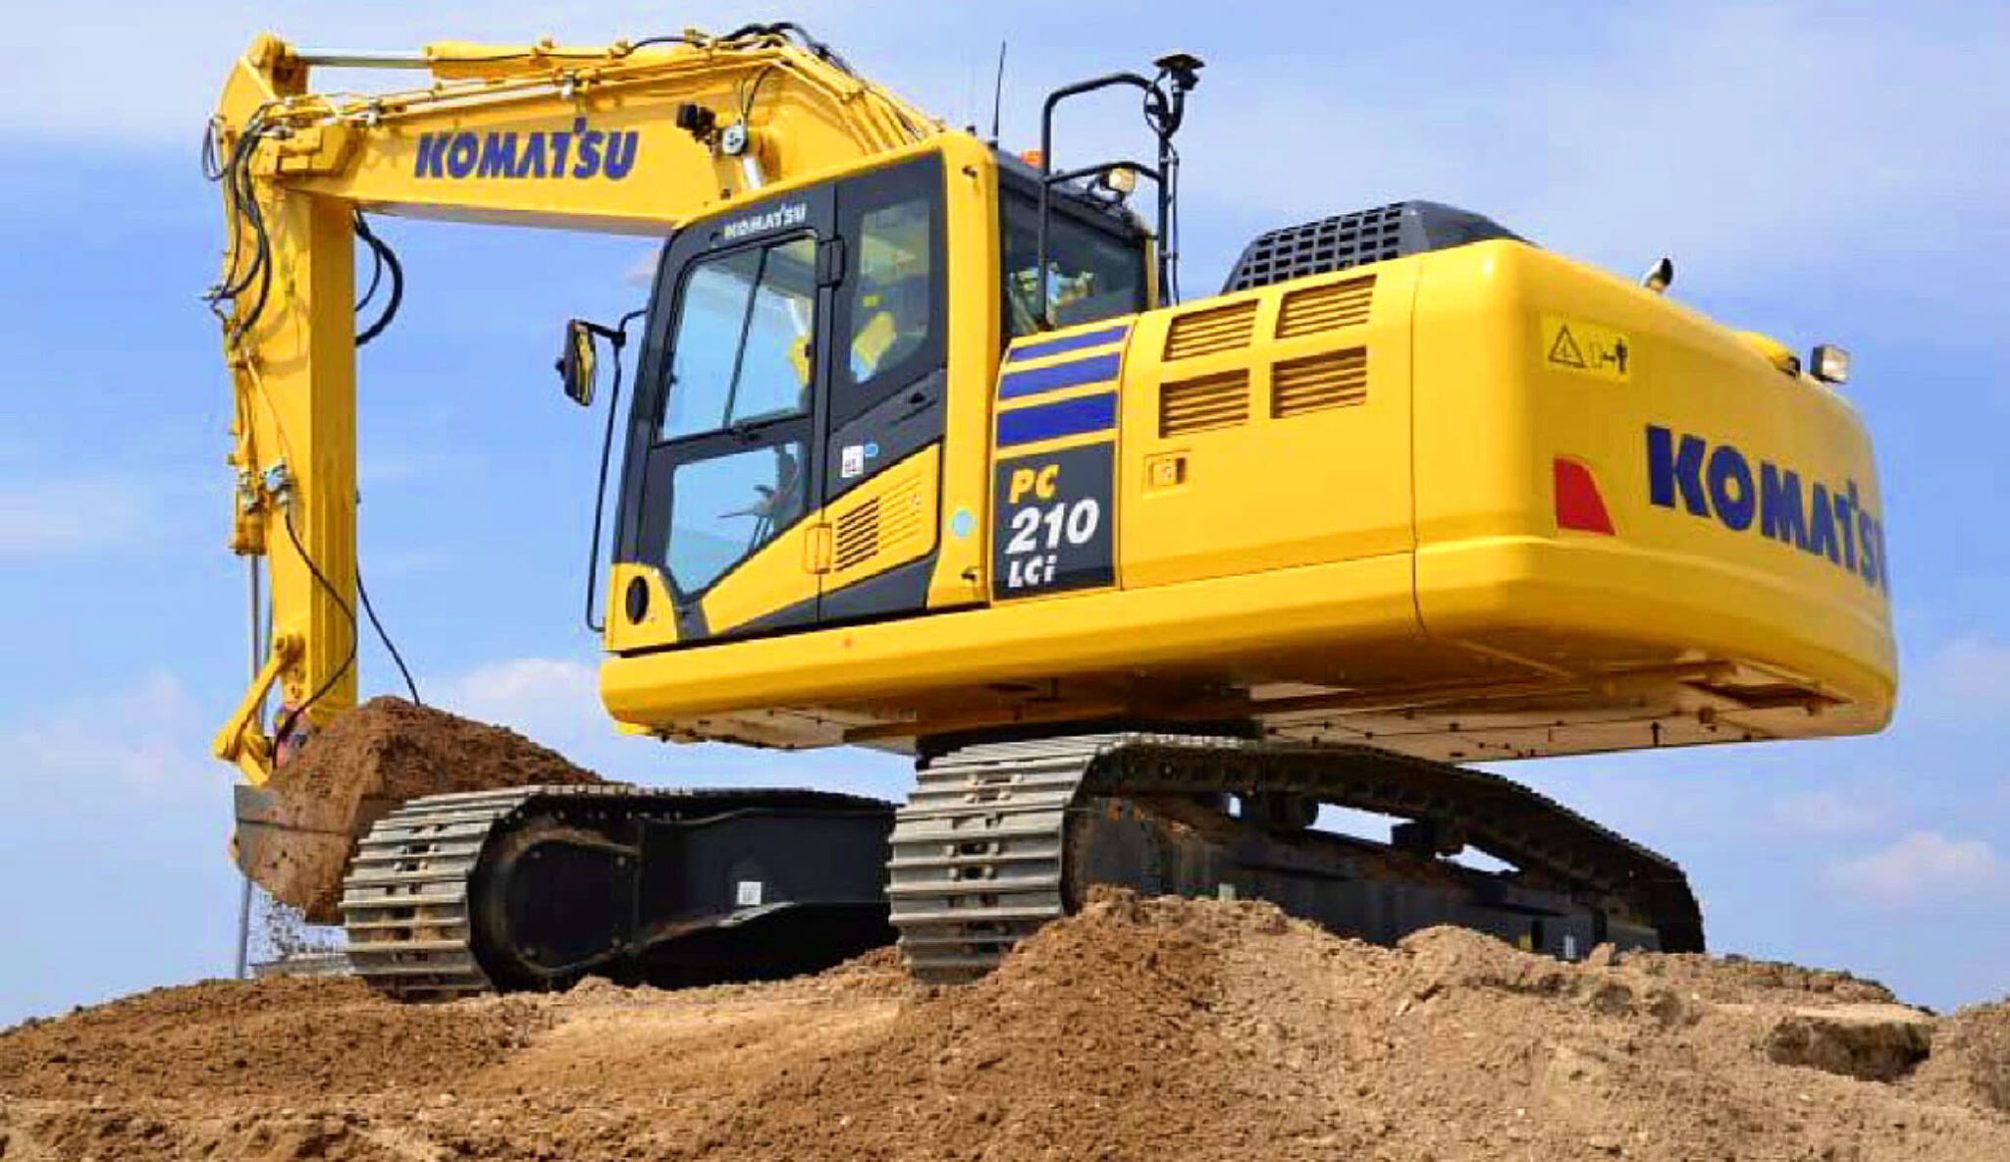 Komatsu Excavators Prices For 21 New Used Pricing